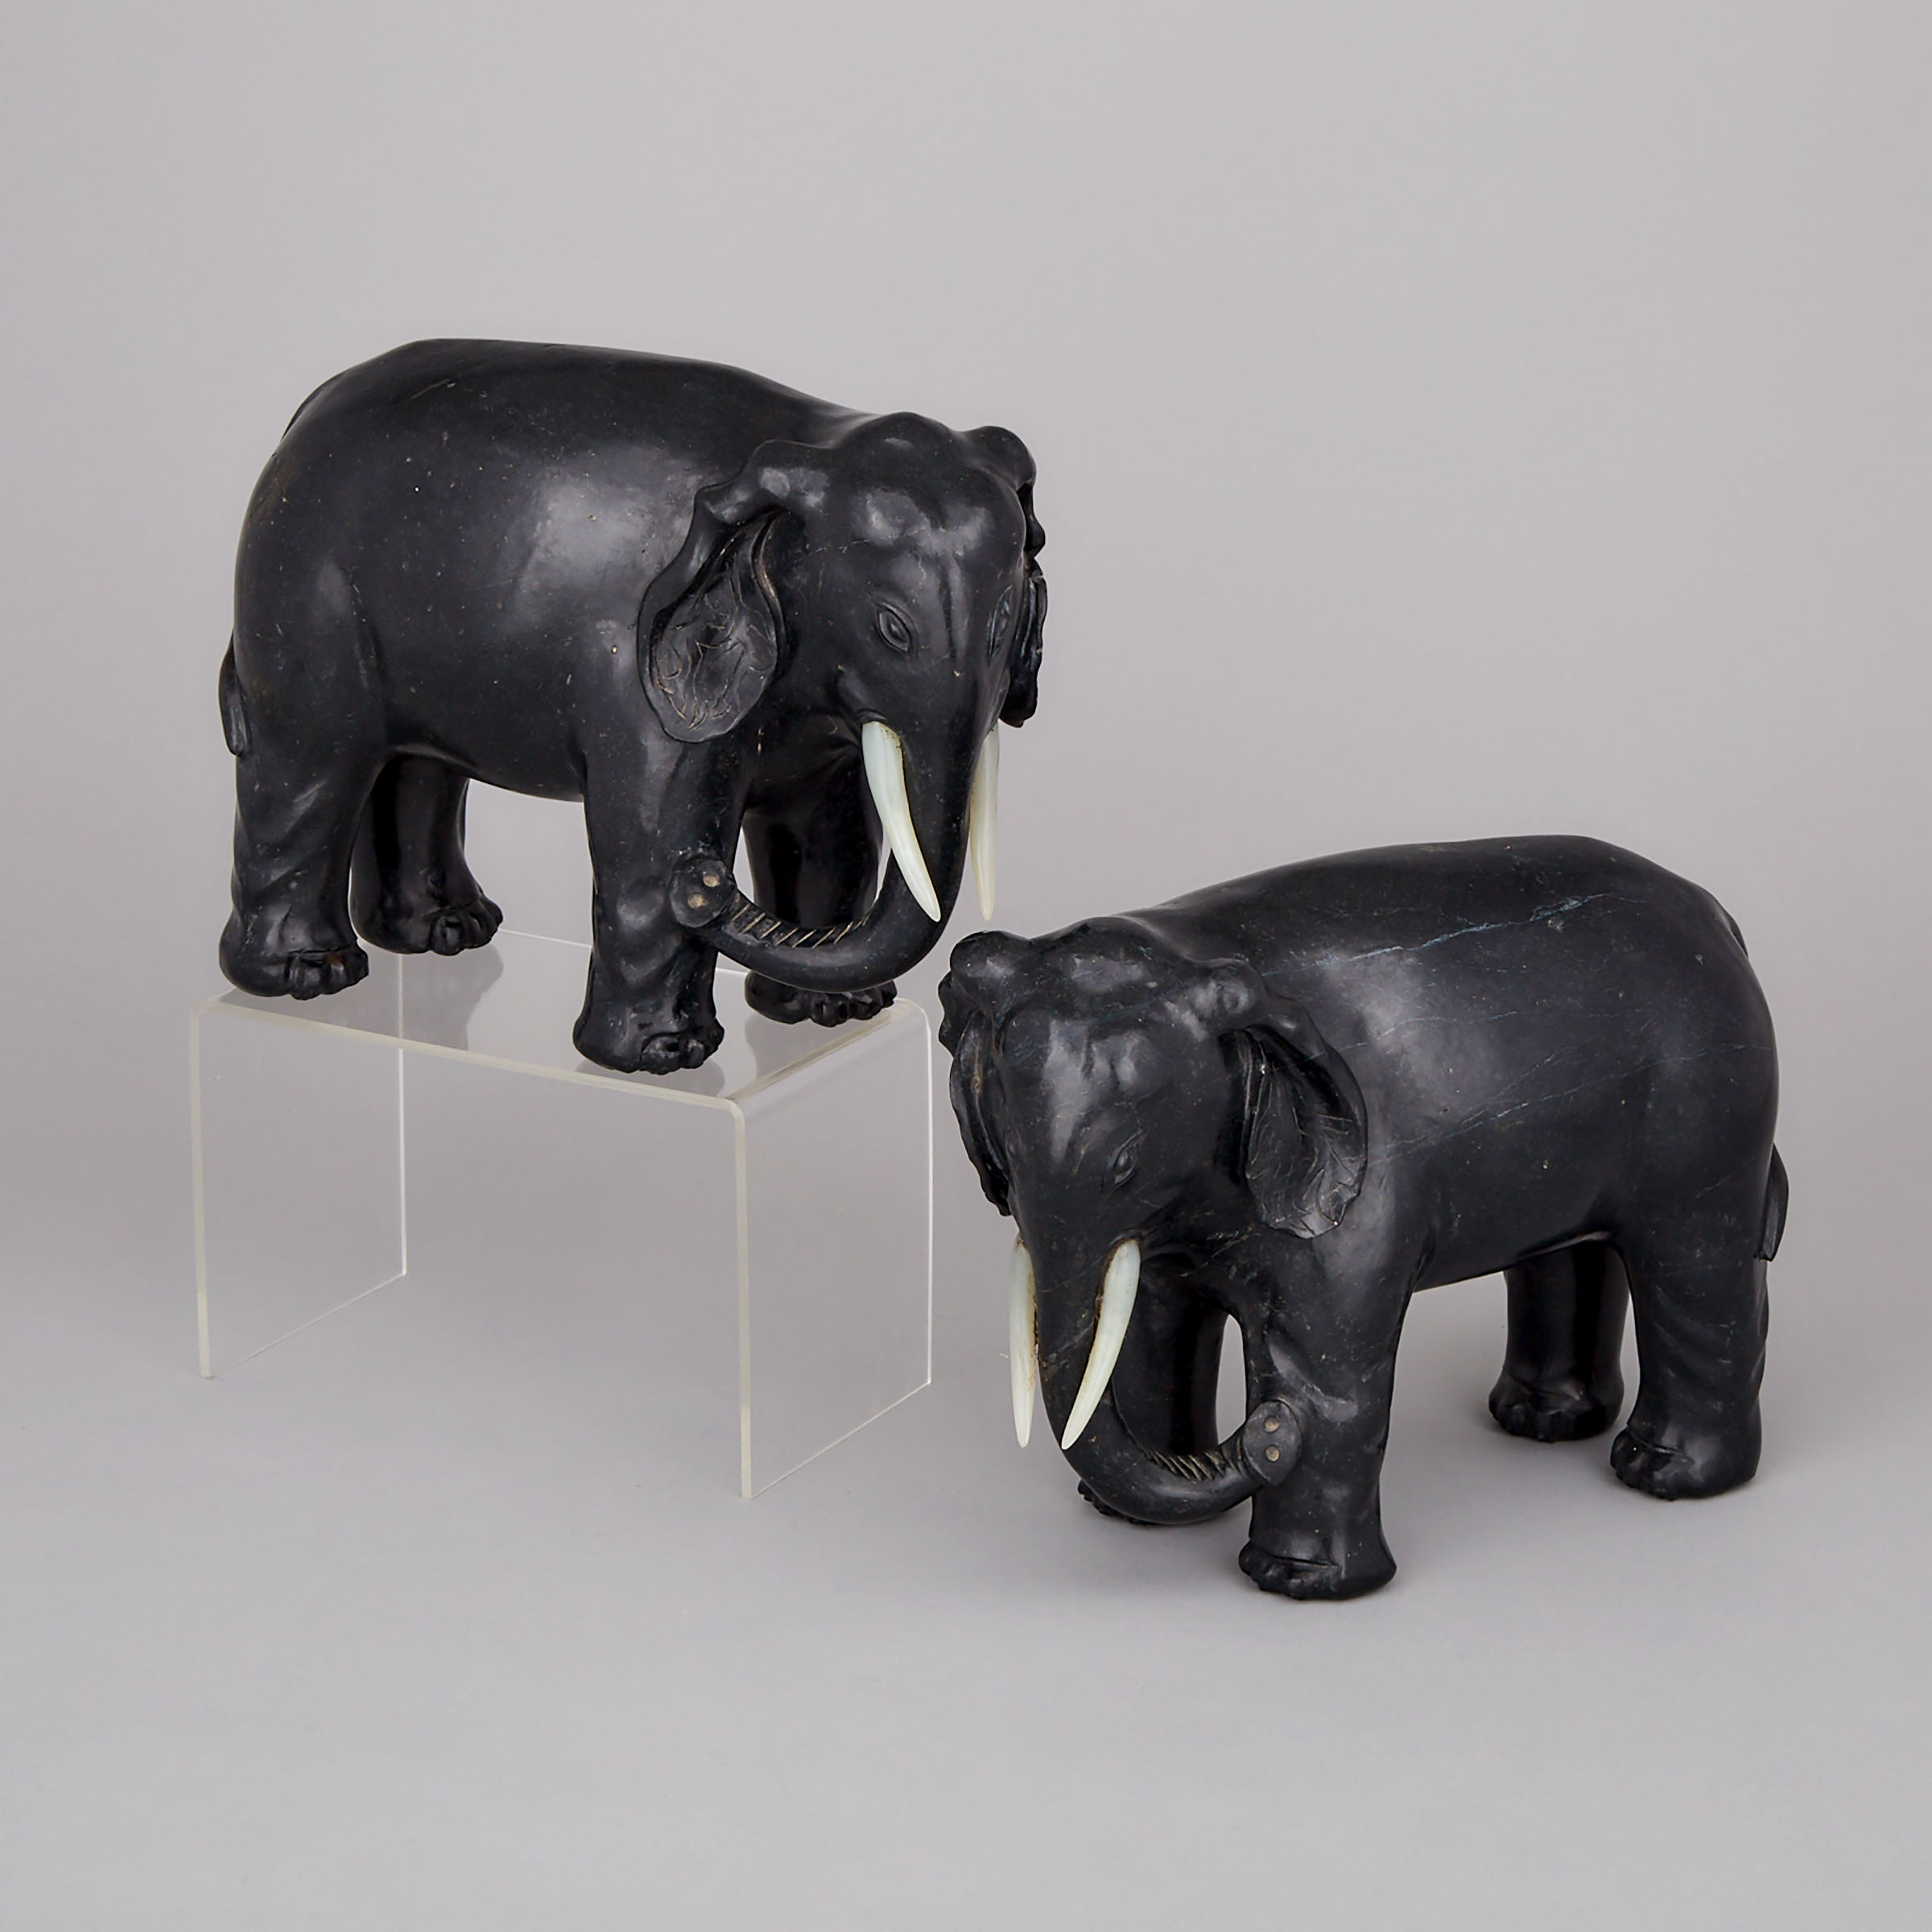 A Pair of Black Jade Elephants